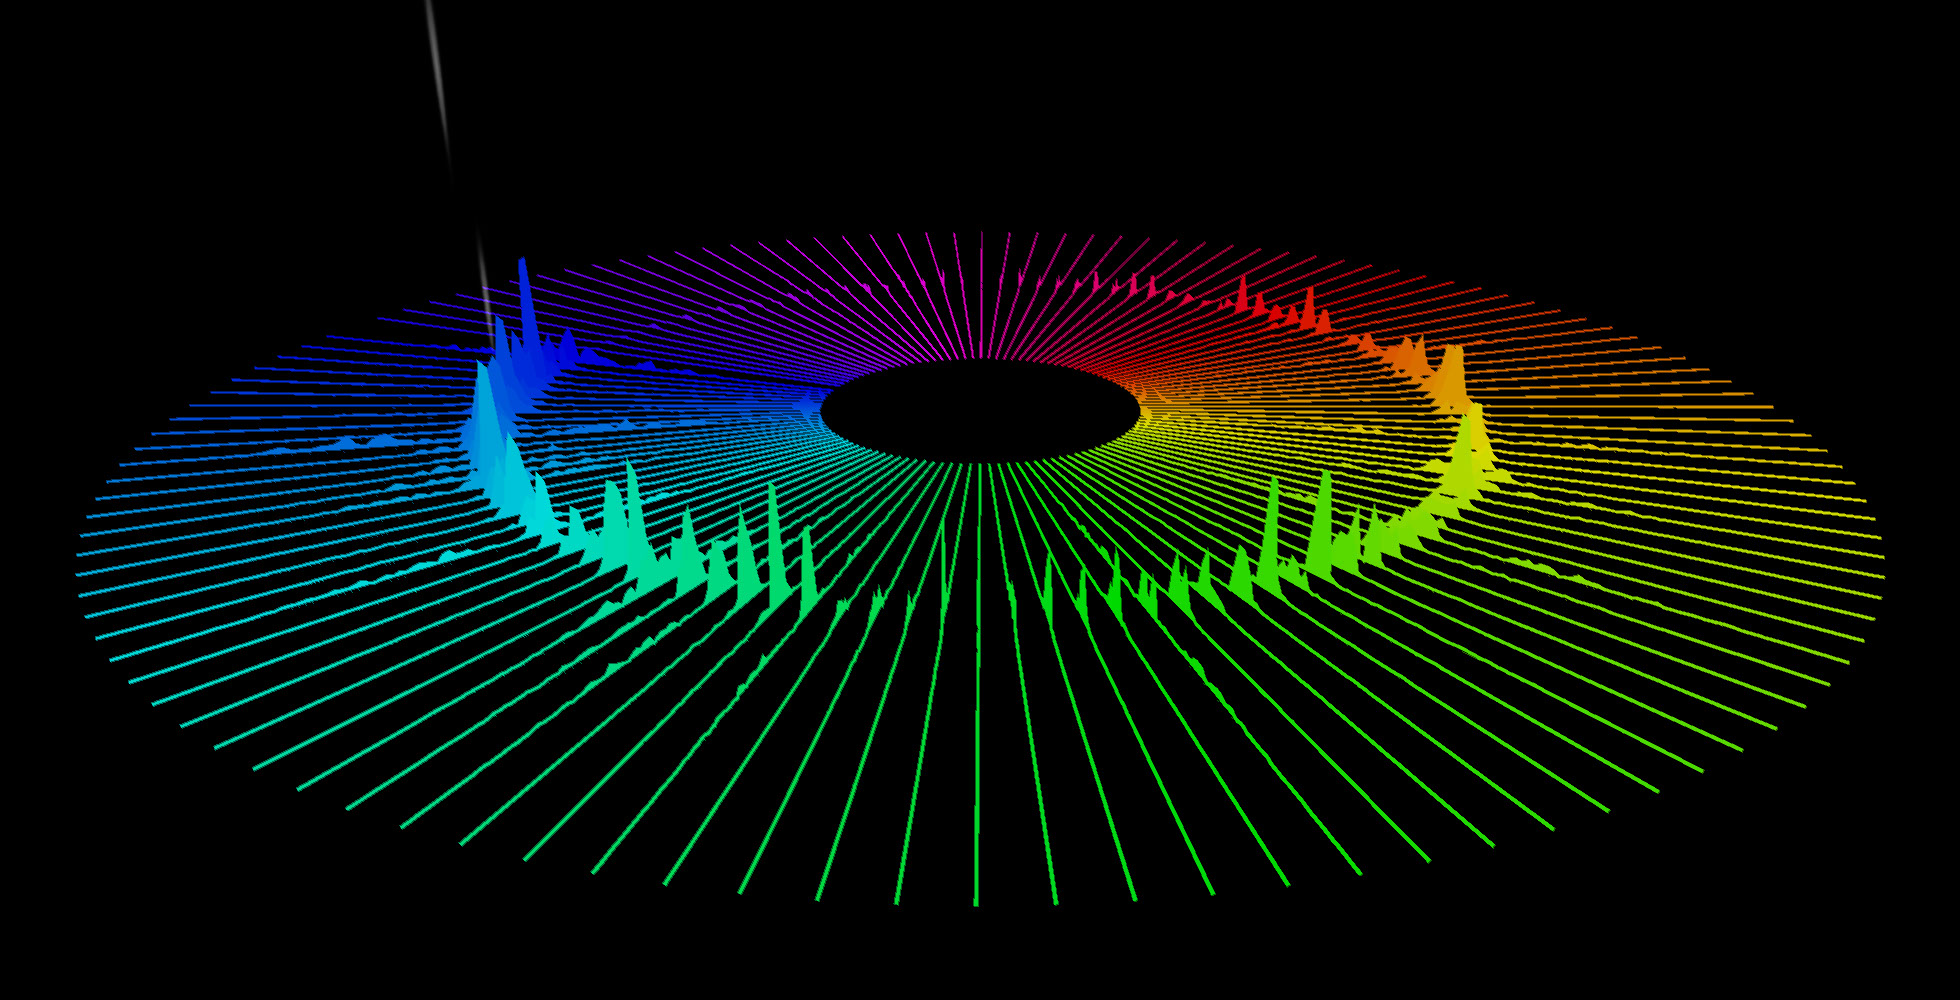 clean audio spectrum music visualizer free download